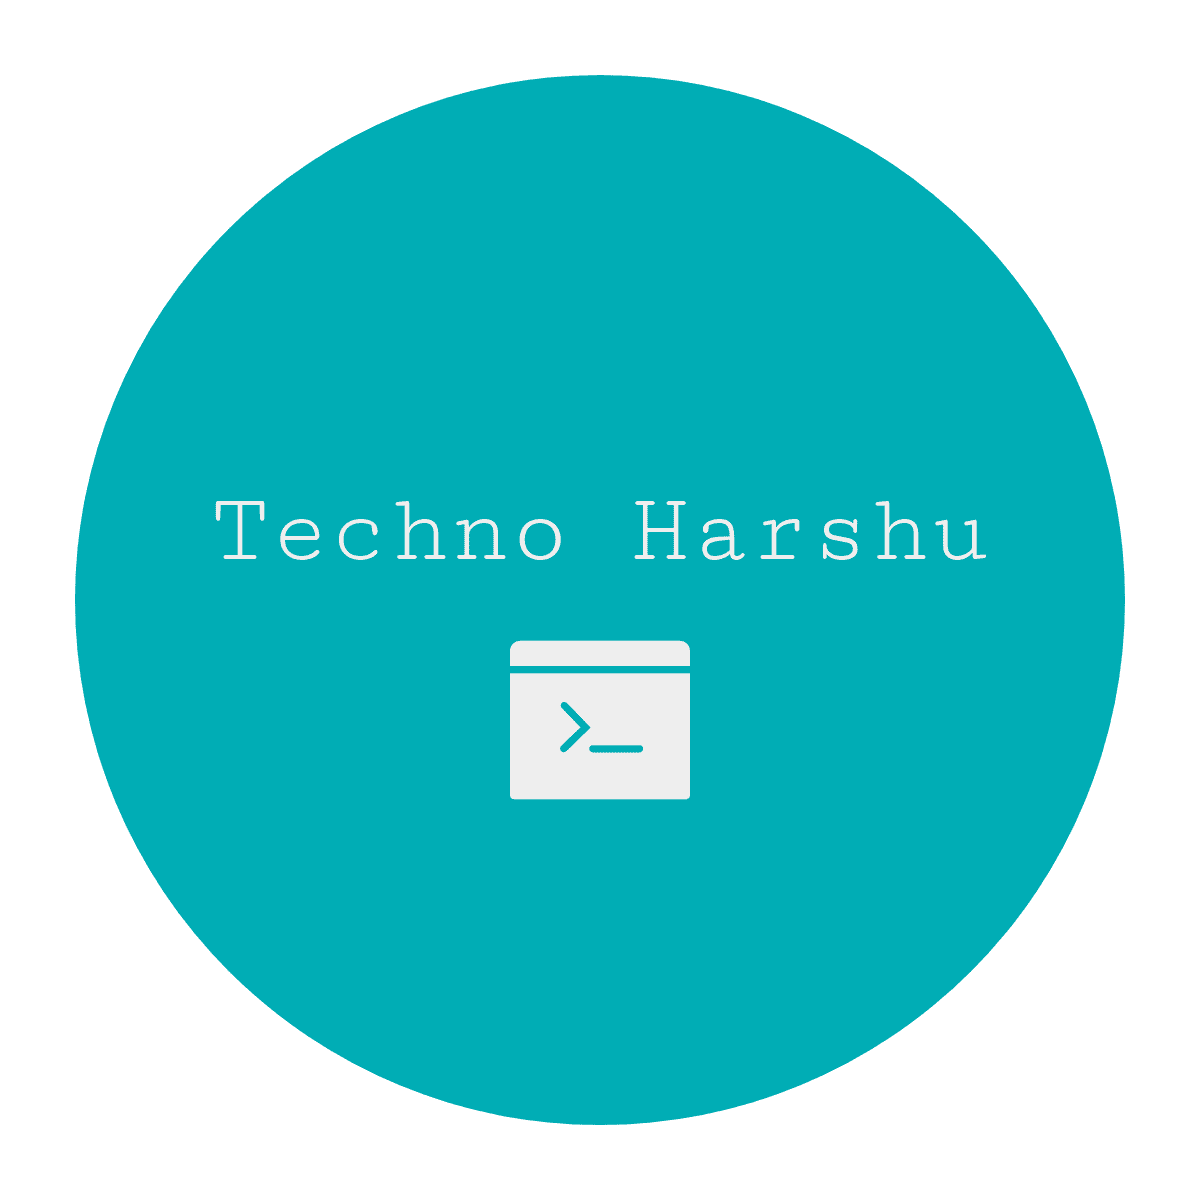 Techno Harshu